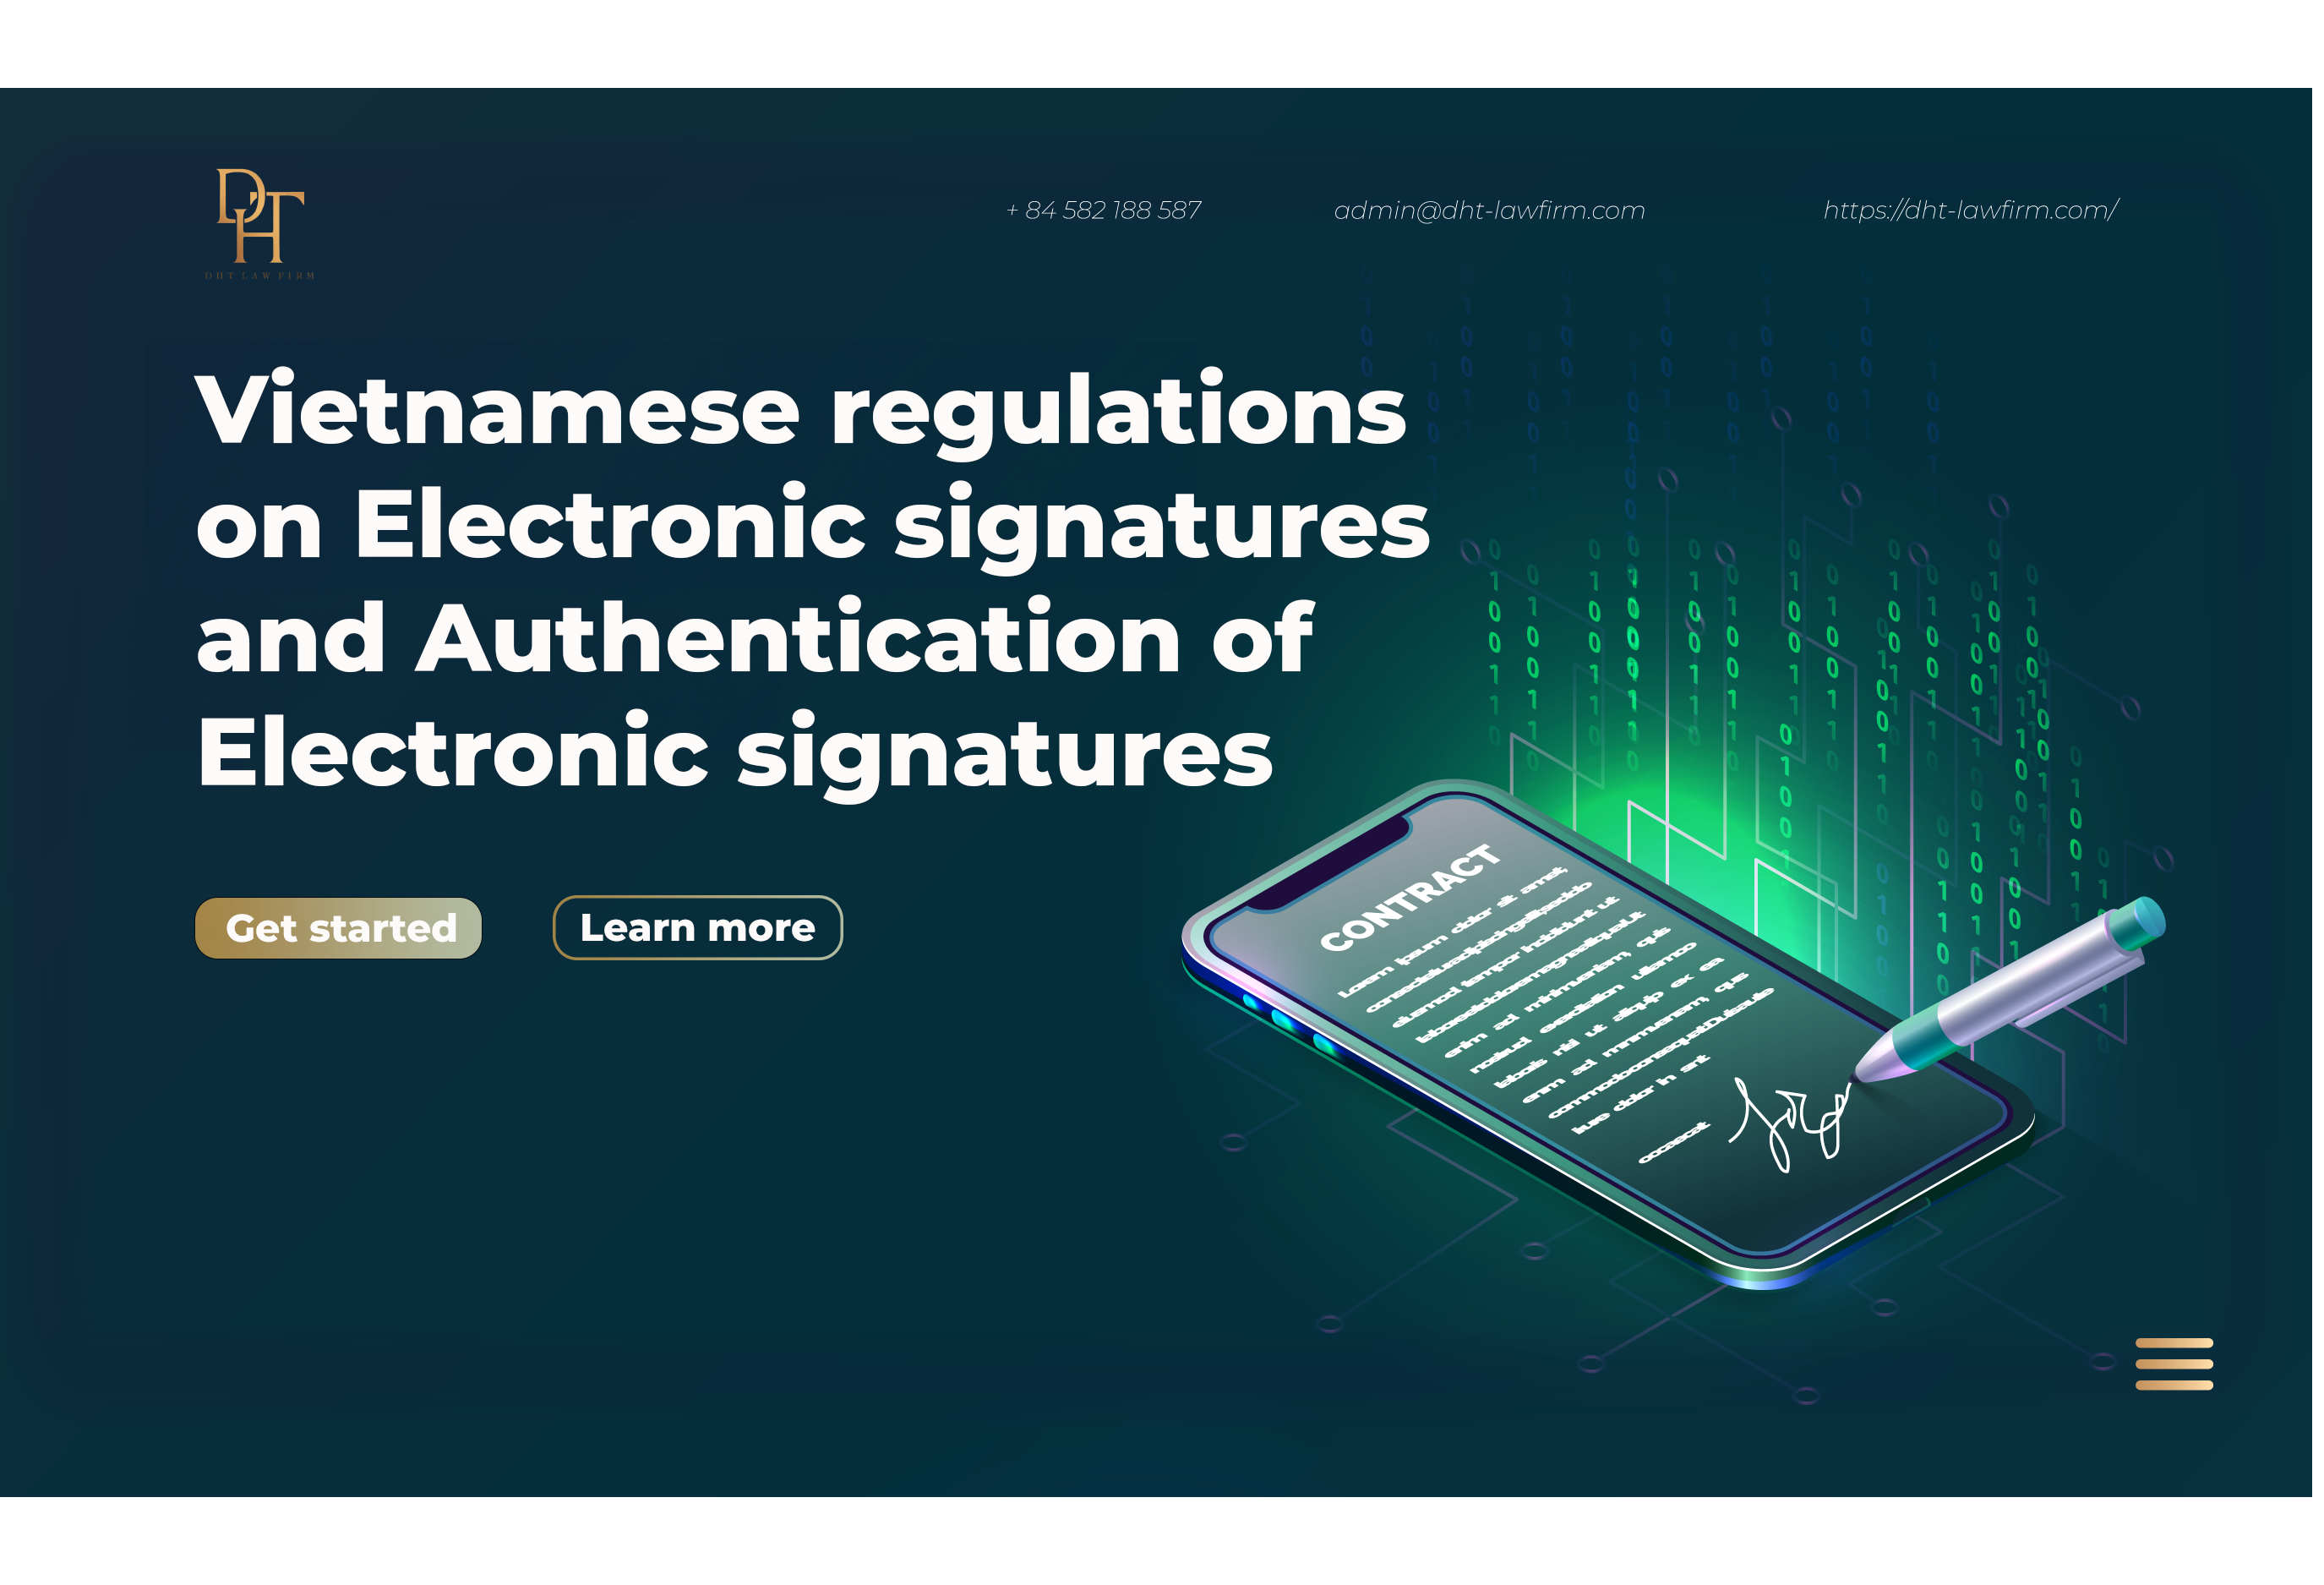 VIETNAMESE REGULATIONS ON ELECTRONIC SIGNATURES AND AUTHENTICATION OF ELECTRONIC SIGNATURES